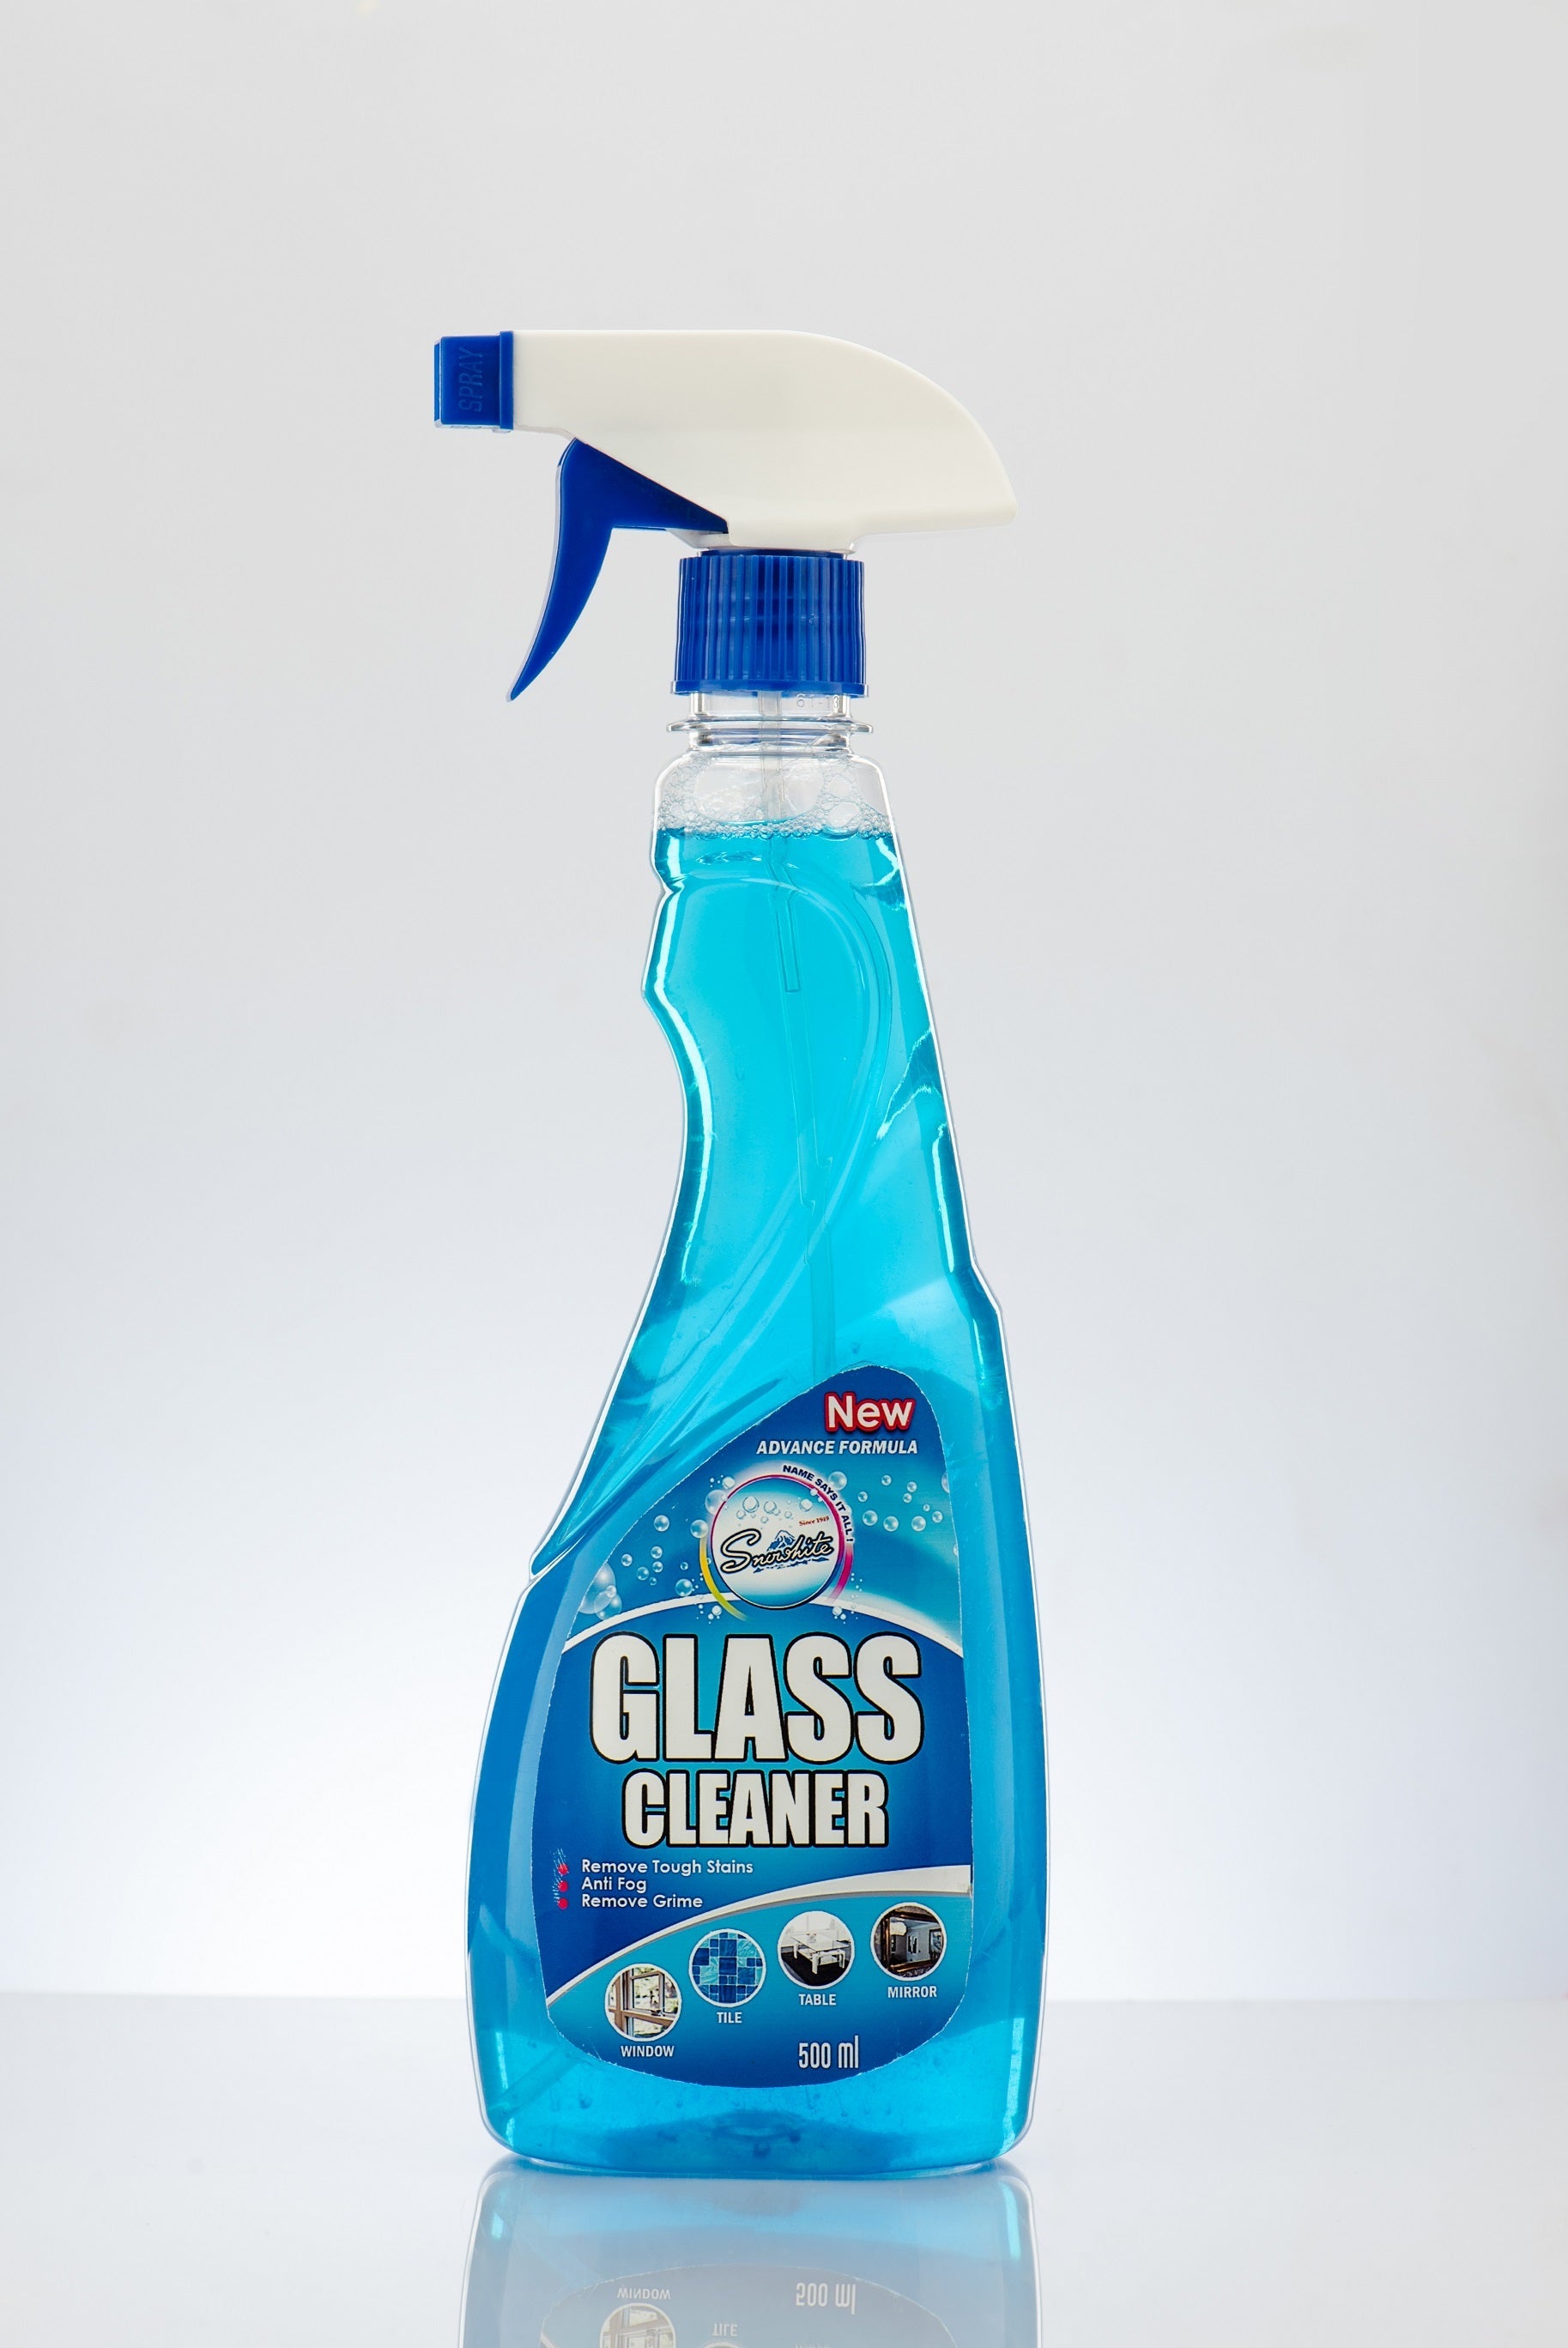 Buy 1 Get 1 Free Glass Cleaner (New Advance Formula) Spray Bottle 500ml